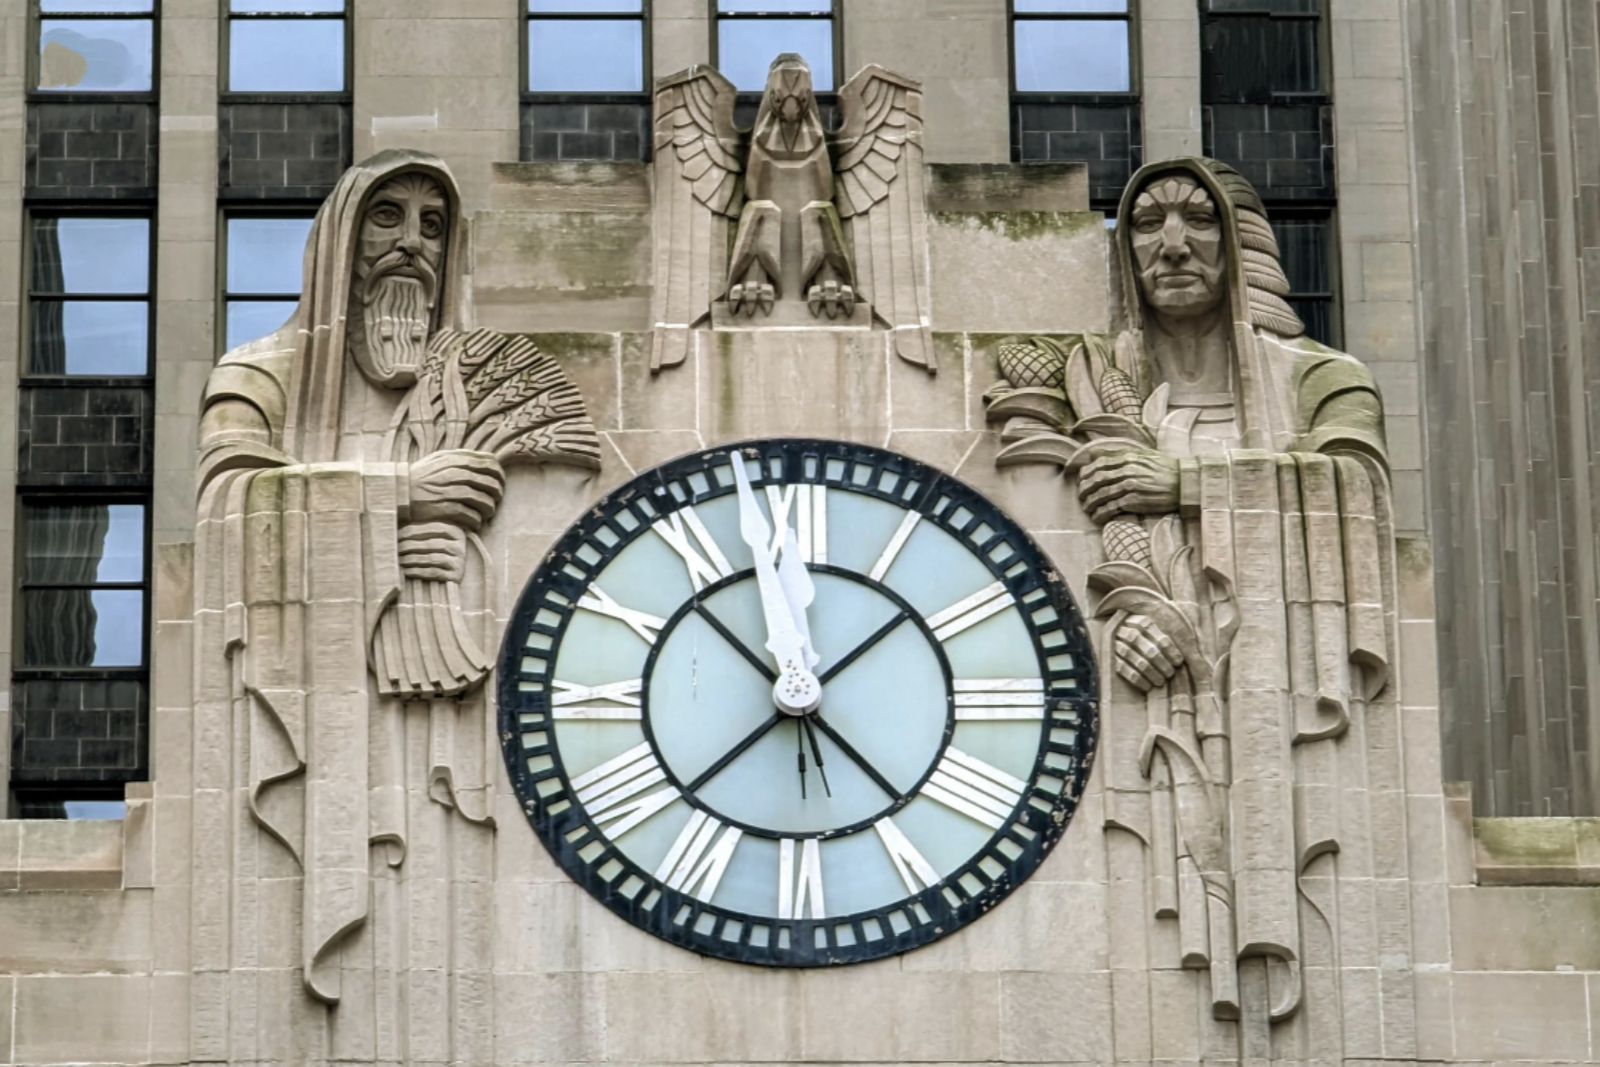 Board of Trade clock